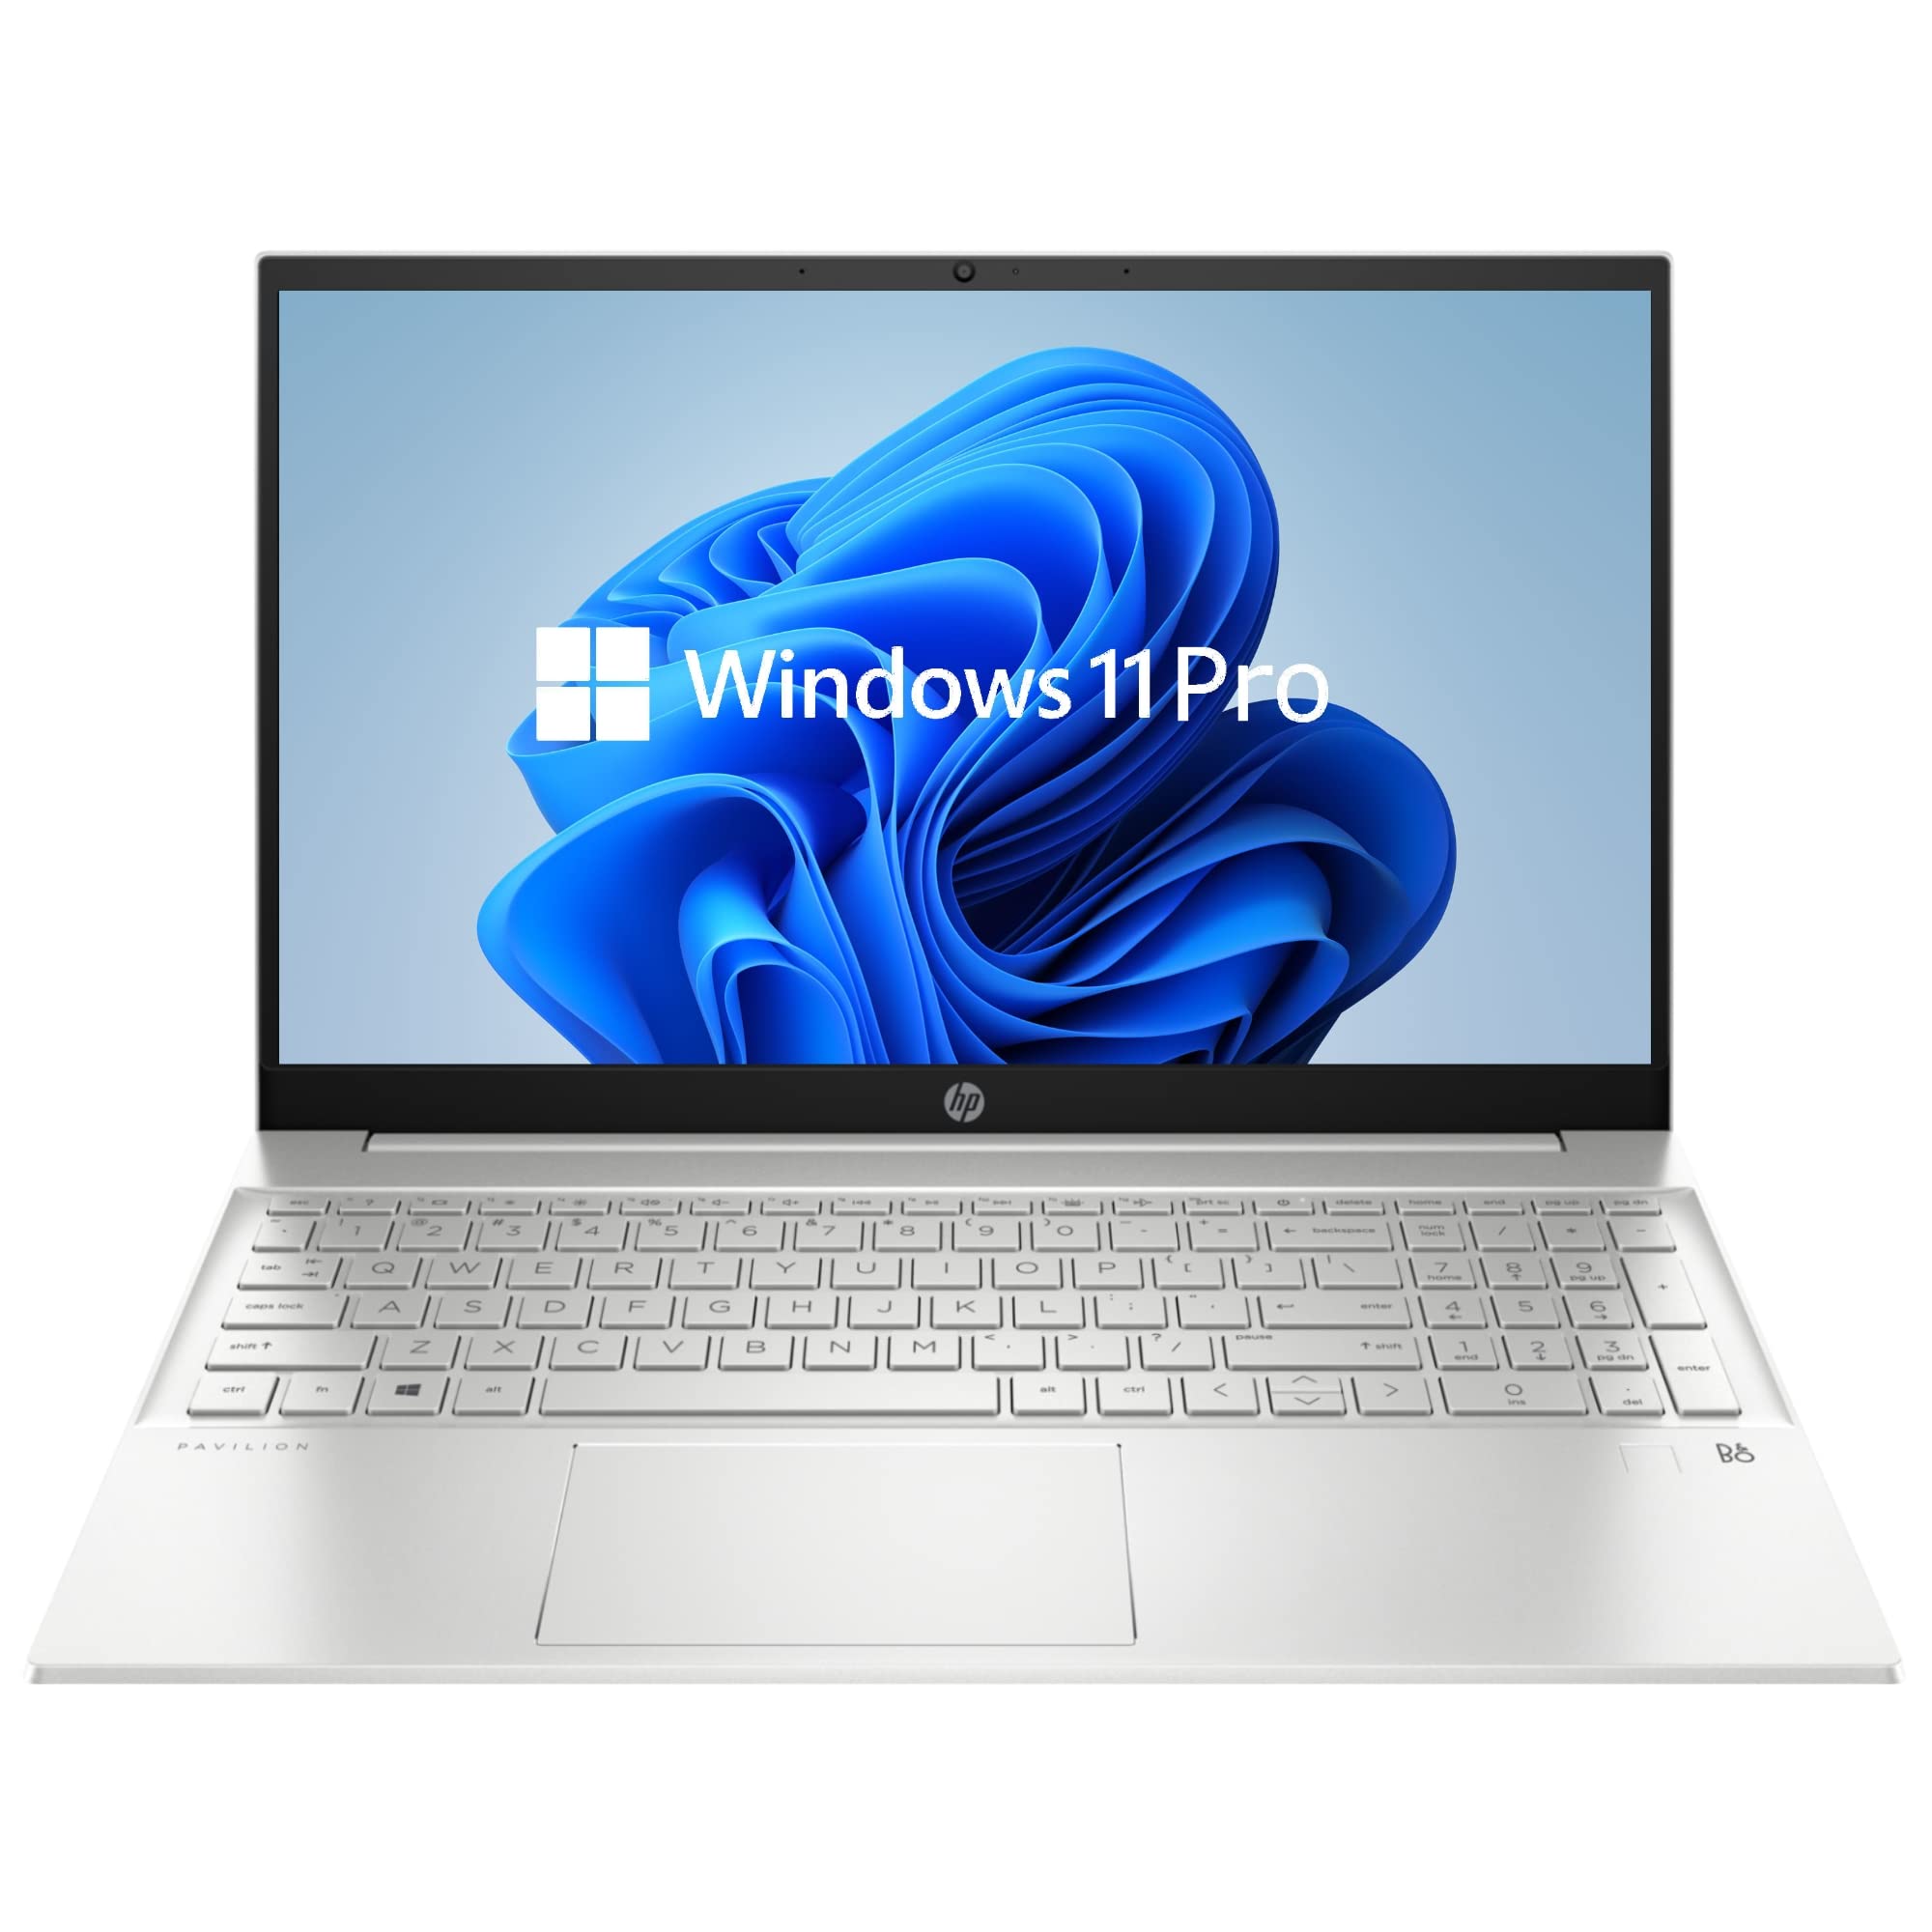 Mua Windows 11 Pro 2022 Newest Hp Pavilion Laptop 156 Full Hd Screen Intel Core I7 1195g7 1275